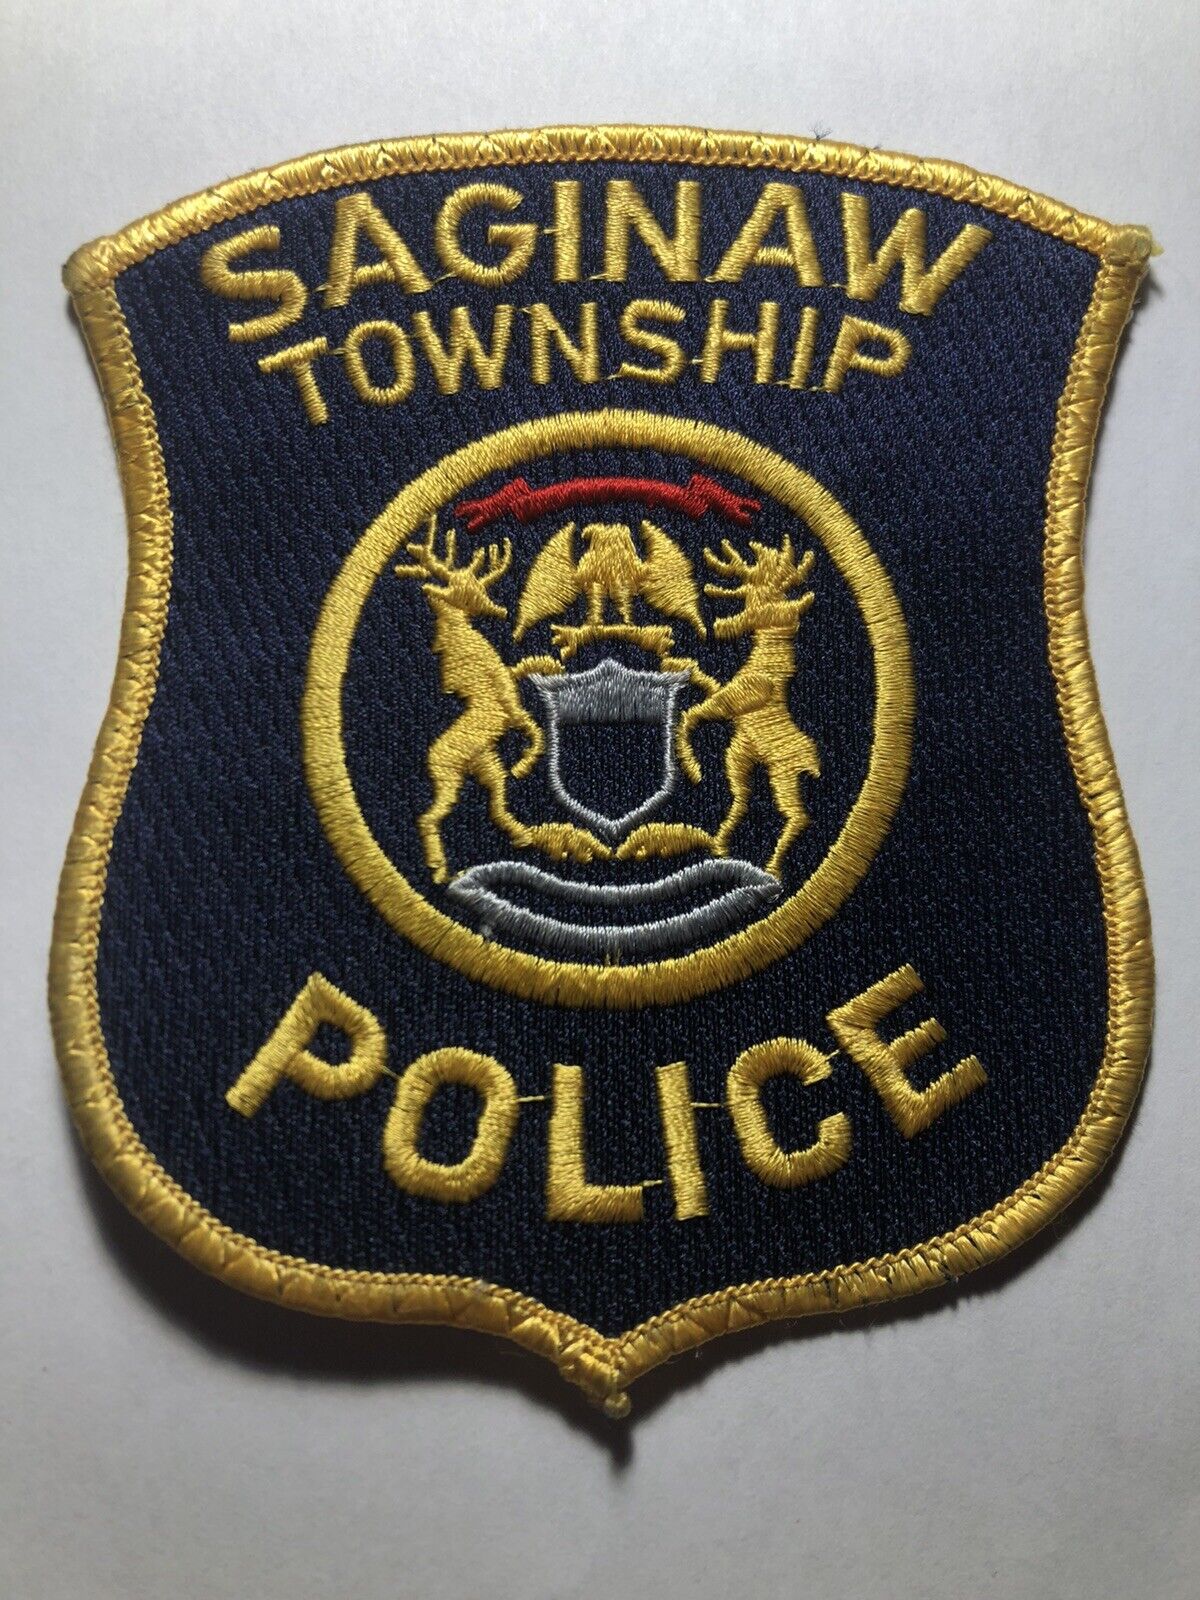 Vintage Saginaw Township Michigan Police Patch